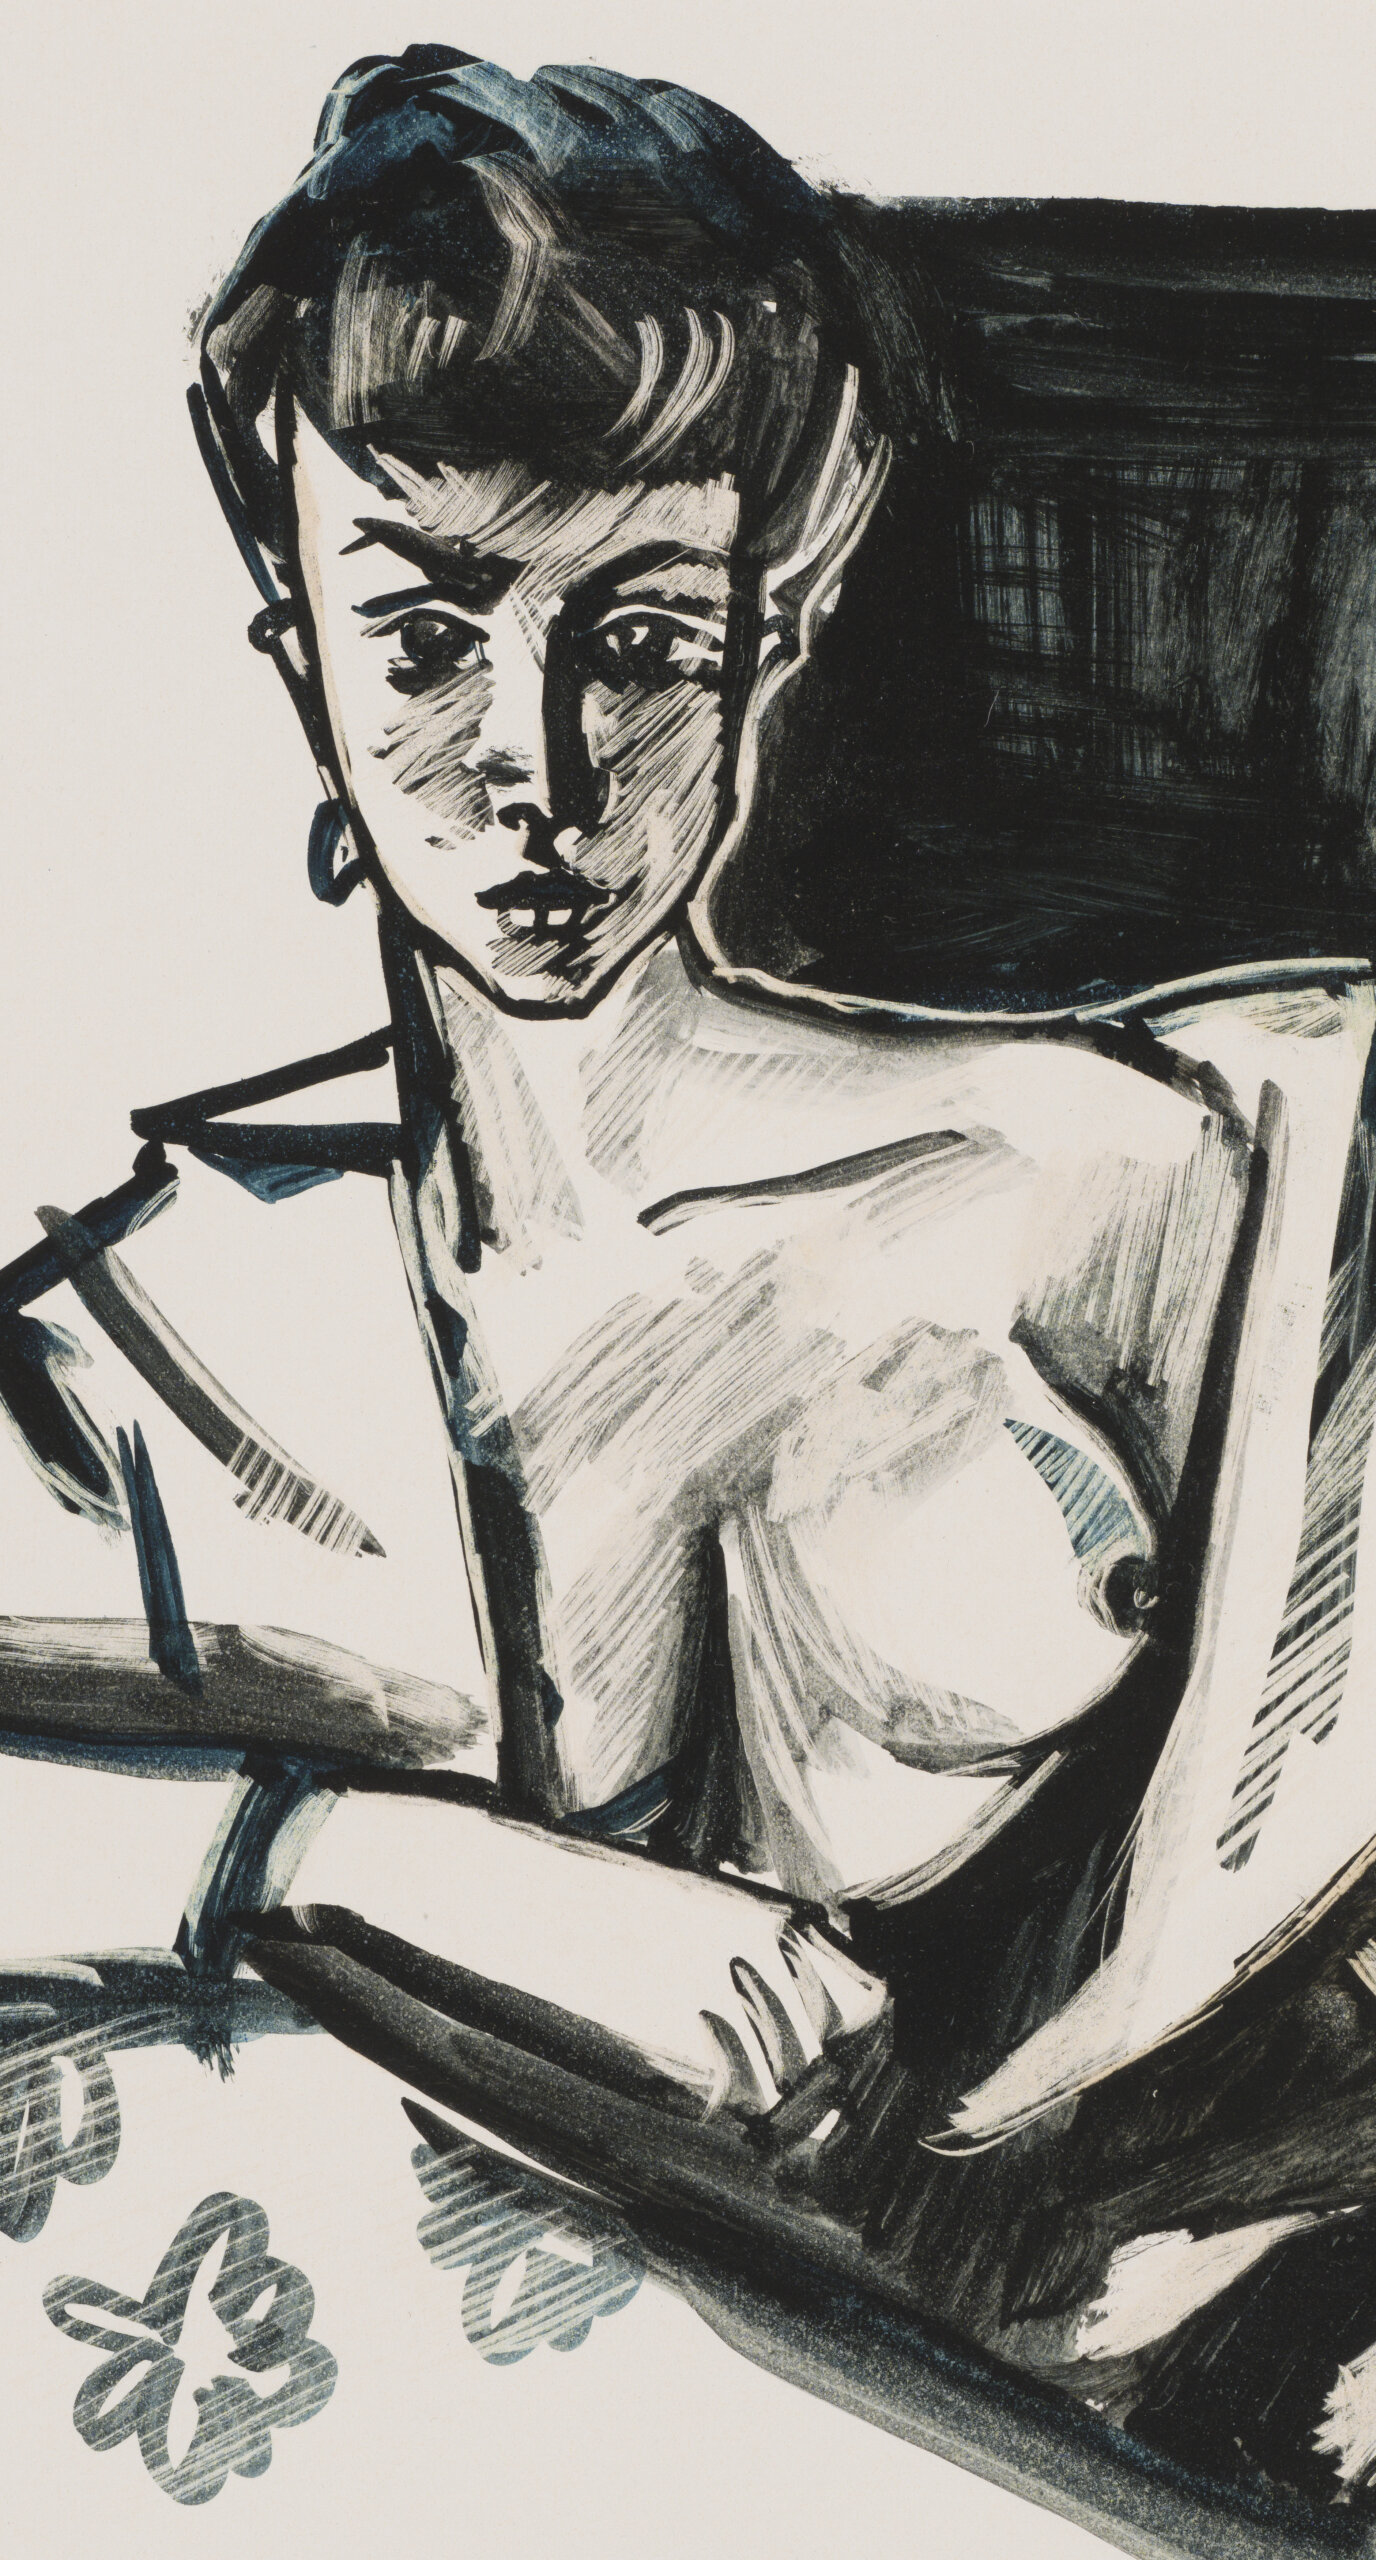 Edgar Valter “Tütarlaps kõrvarõngaga”, 1962. Ava 21 x 27,5 cm.